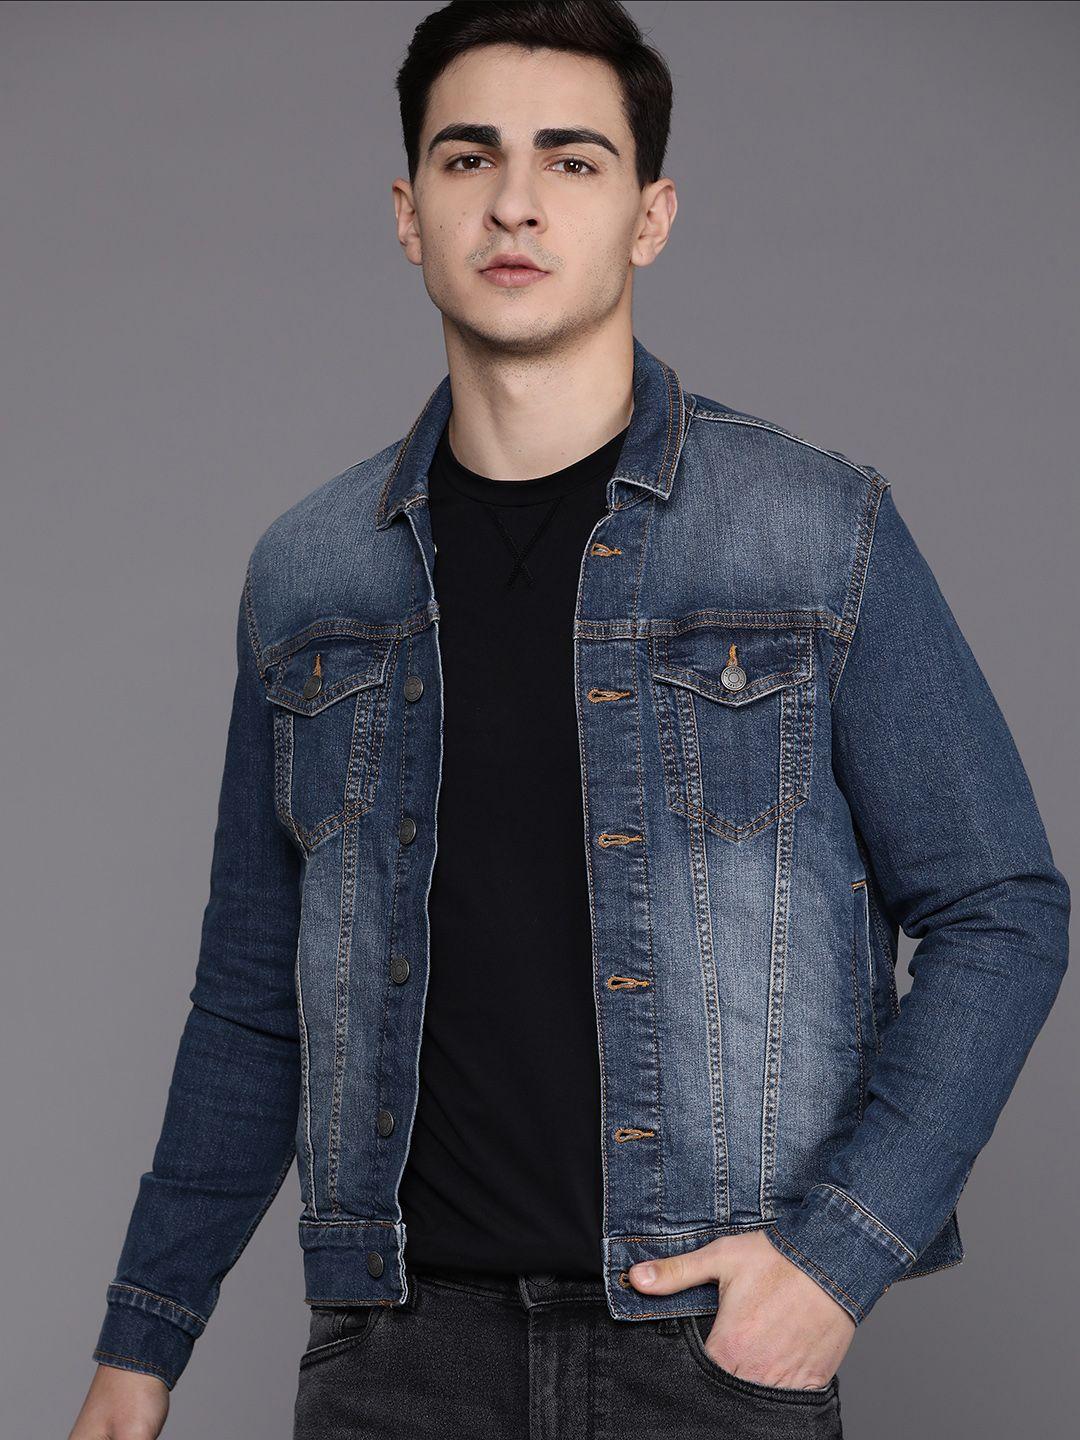 louis philippe jeans flap pockets detailed spread collar denim jacket